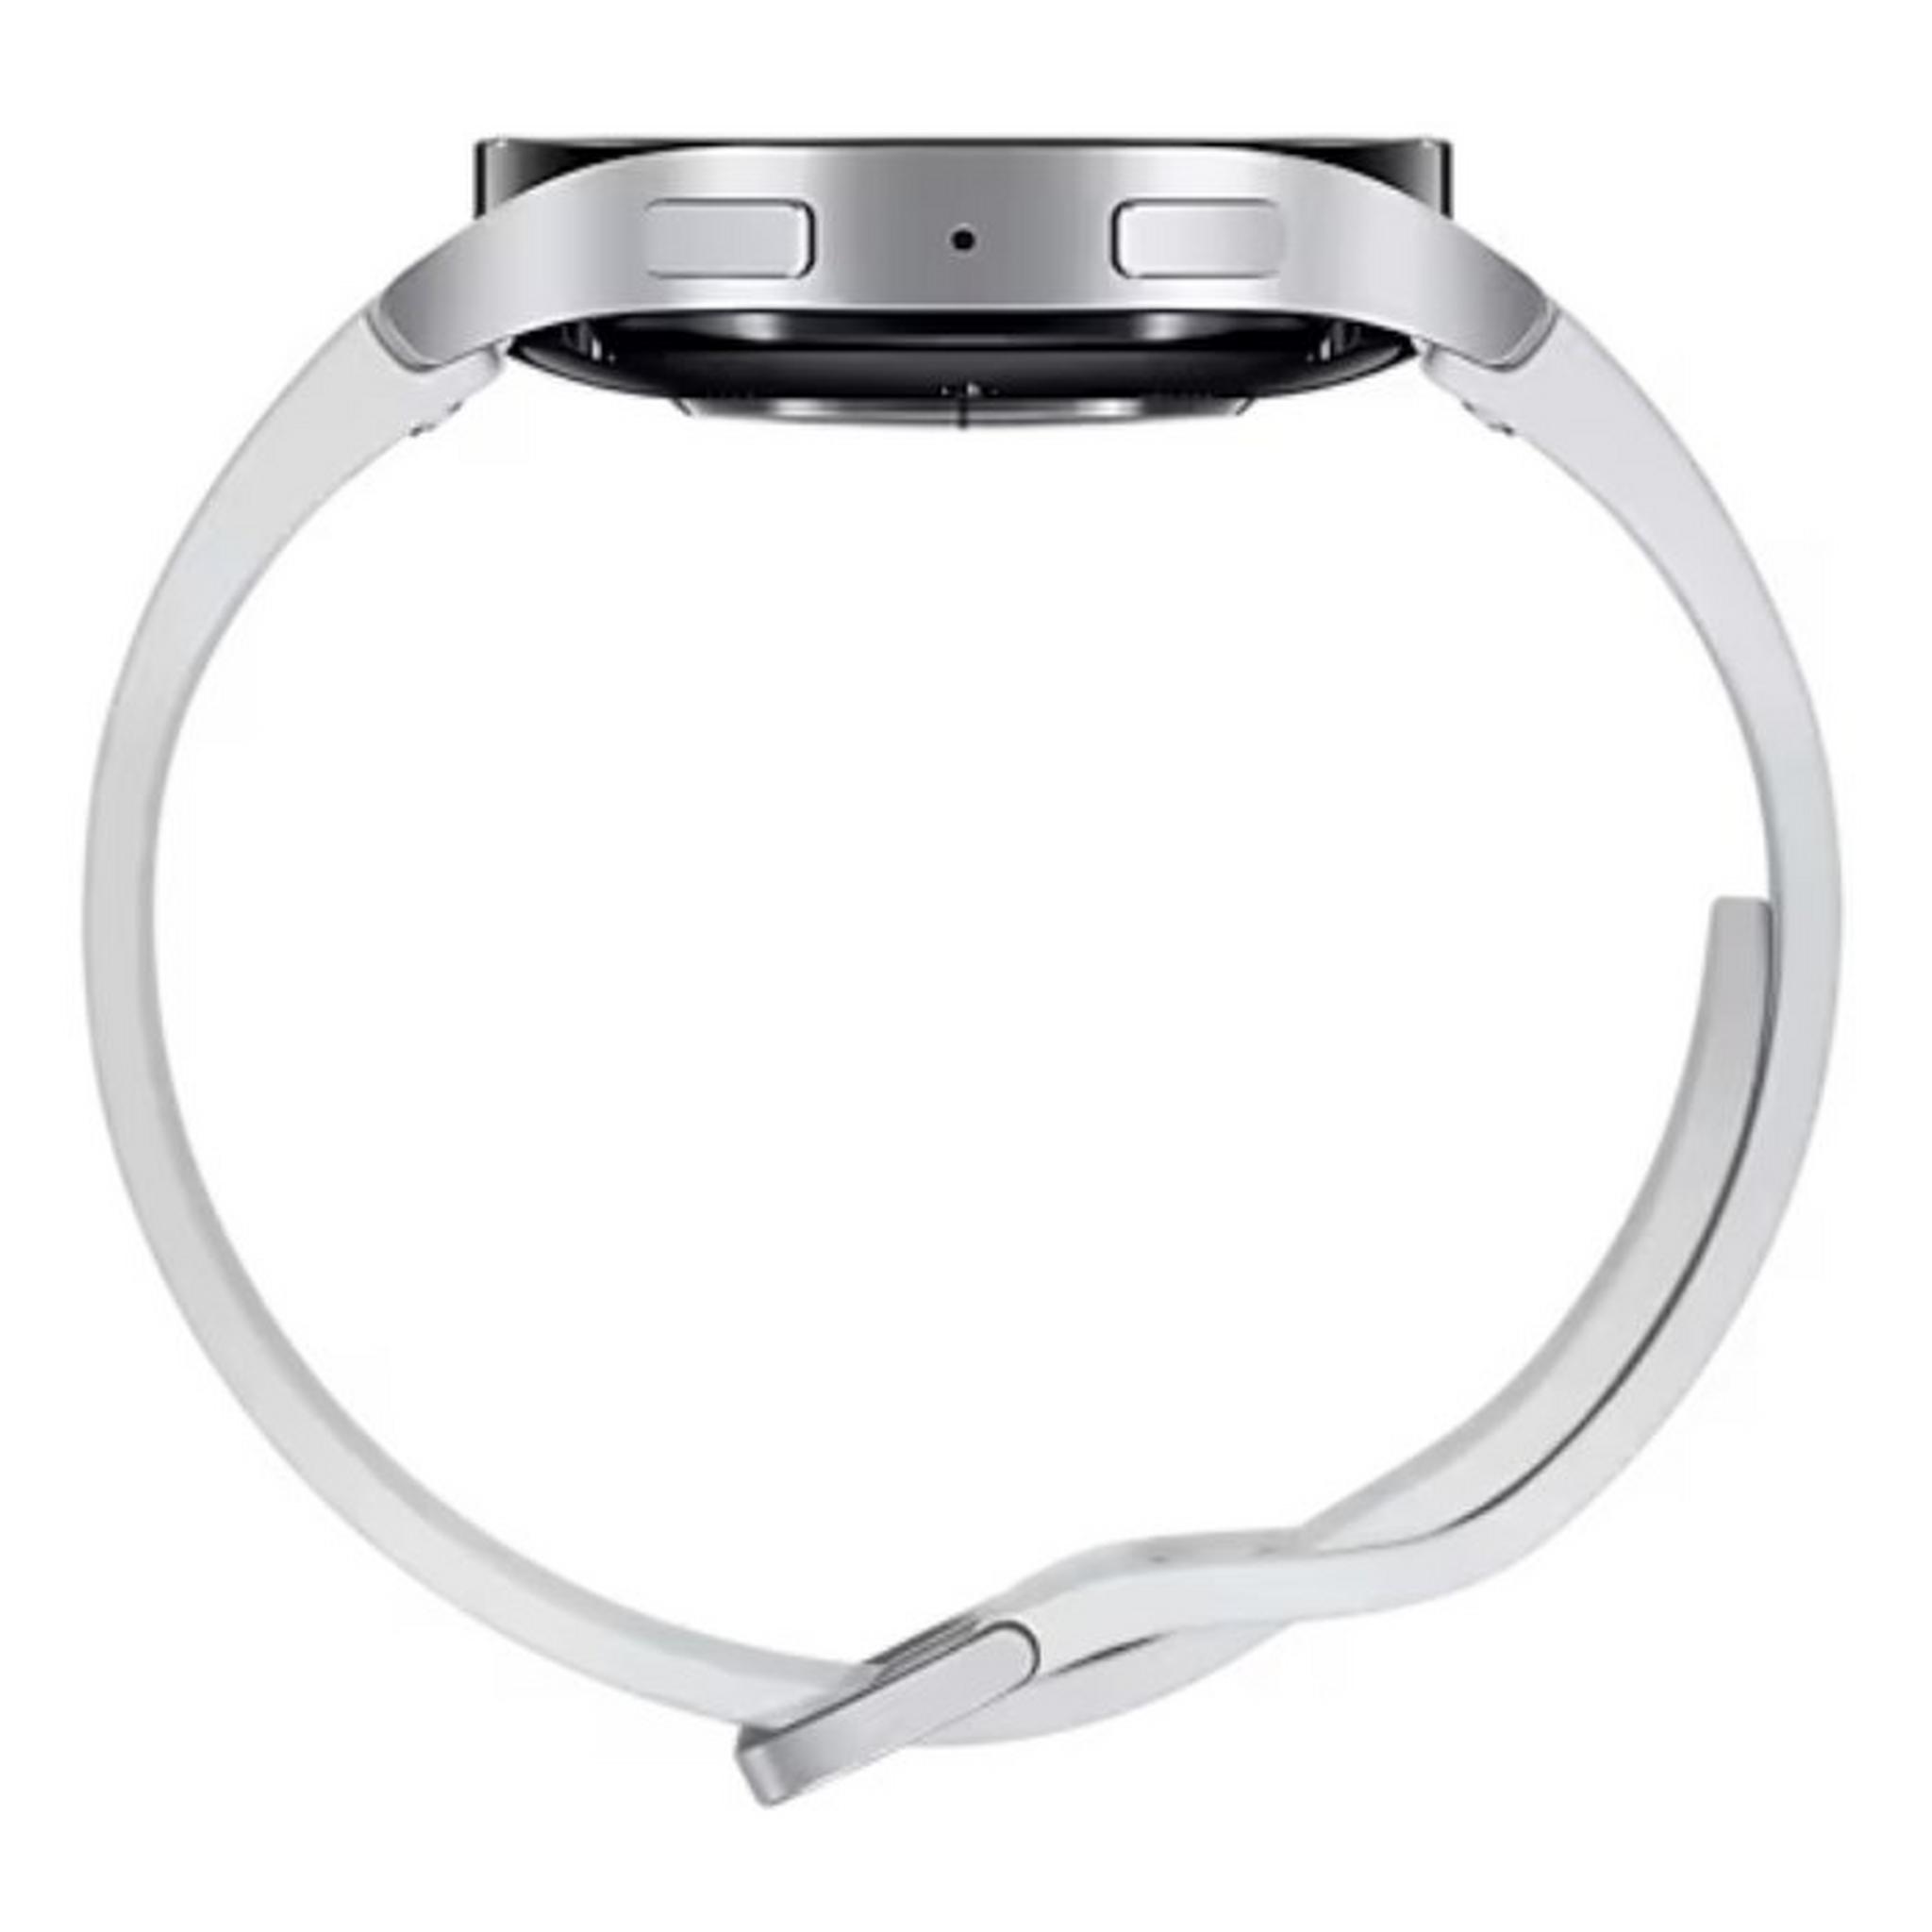 Samsung Galaxy Watch6, 44mm, Bluetooth Aluminum body, Silicon Strap - Sliver